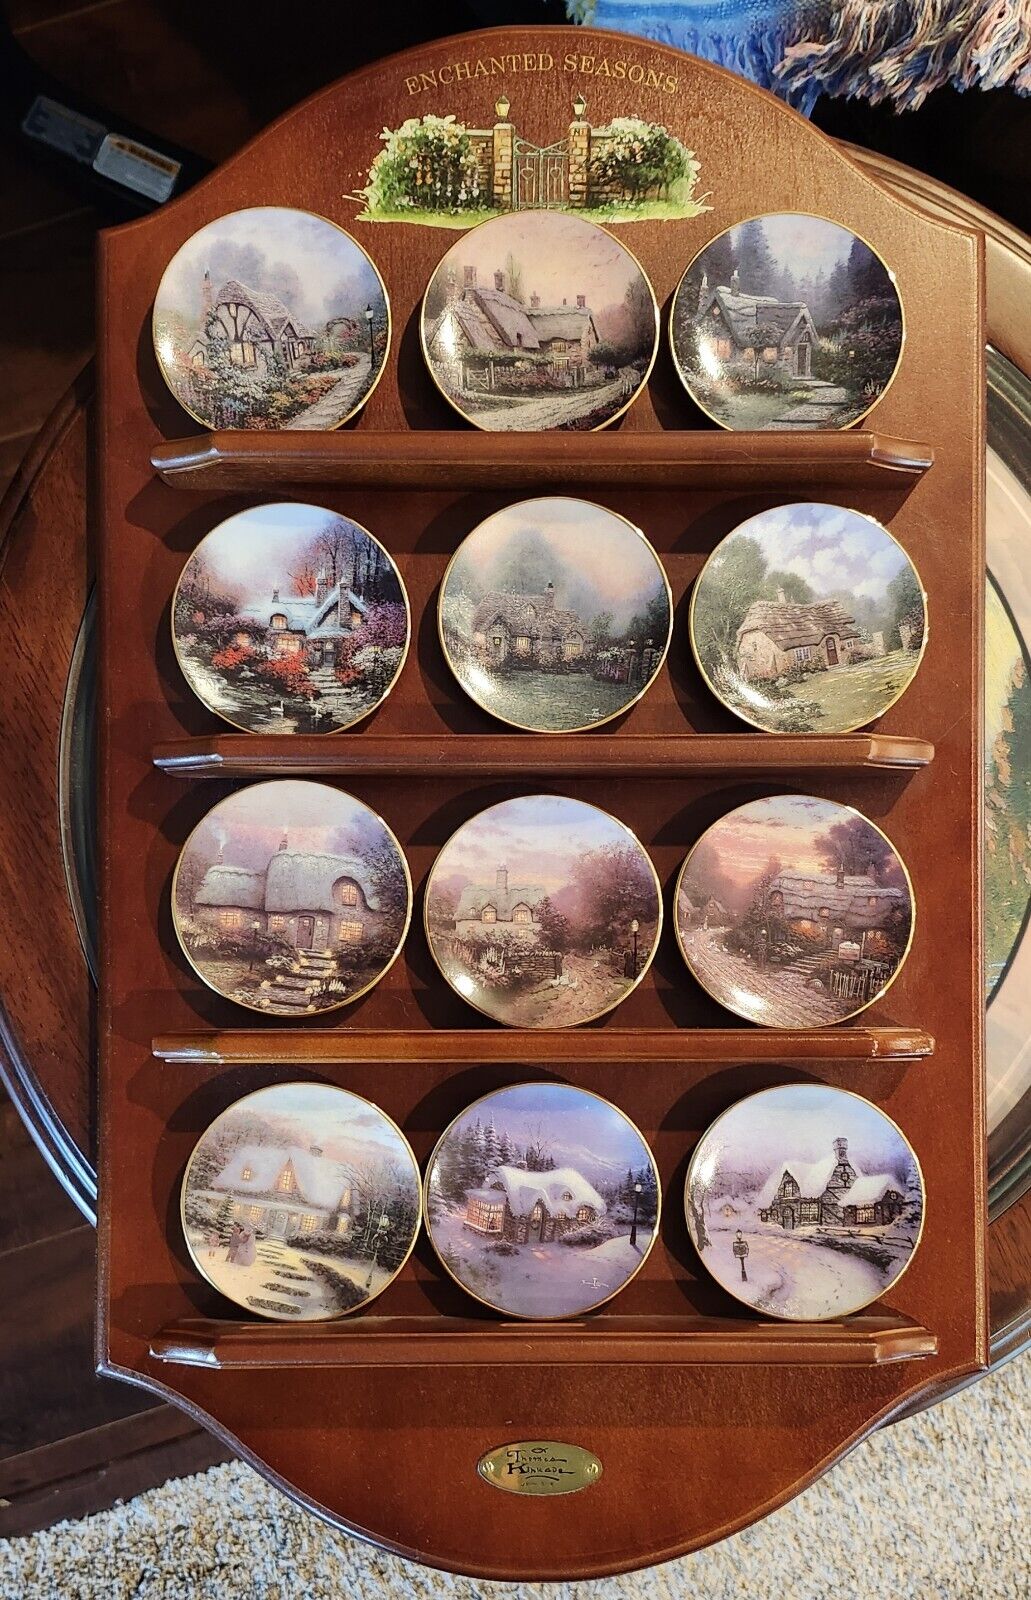 Thomas Kinkade Mini Plates Enchanted Seasons 12 piece set